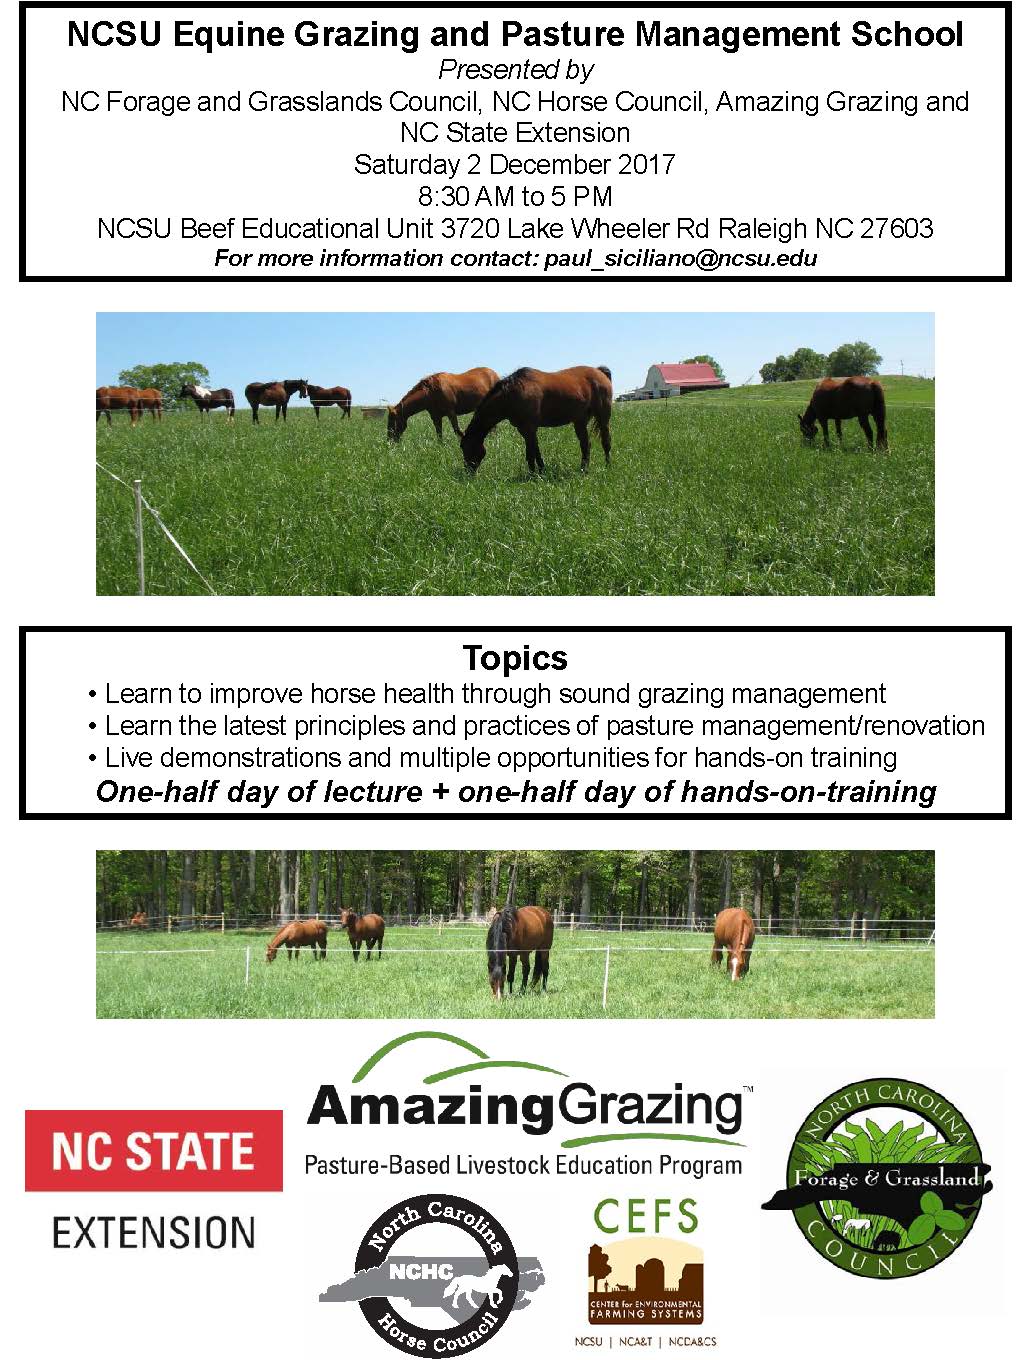 NCSU Equine Grazing and Pasture Management School flyer